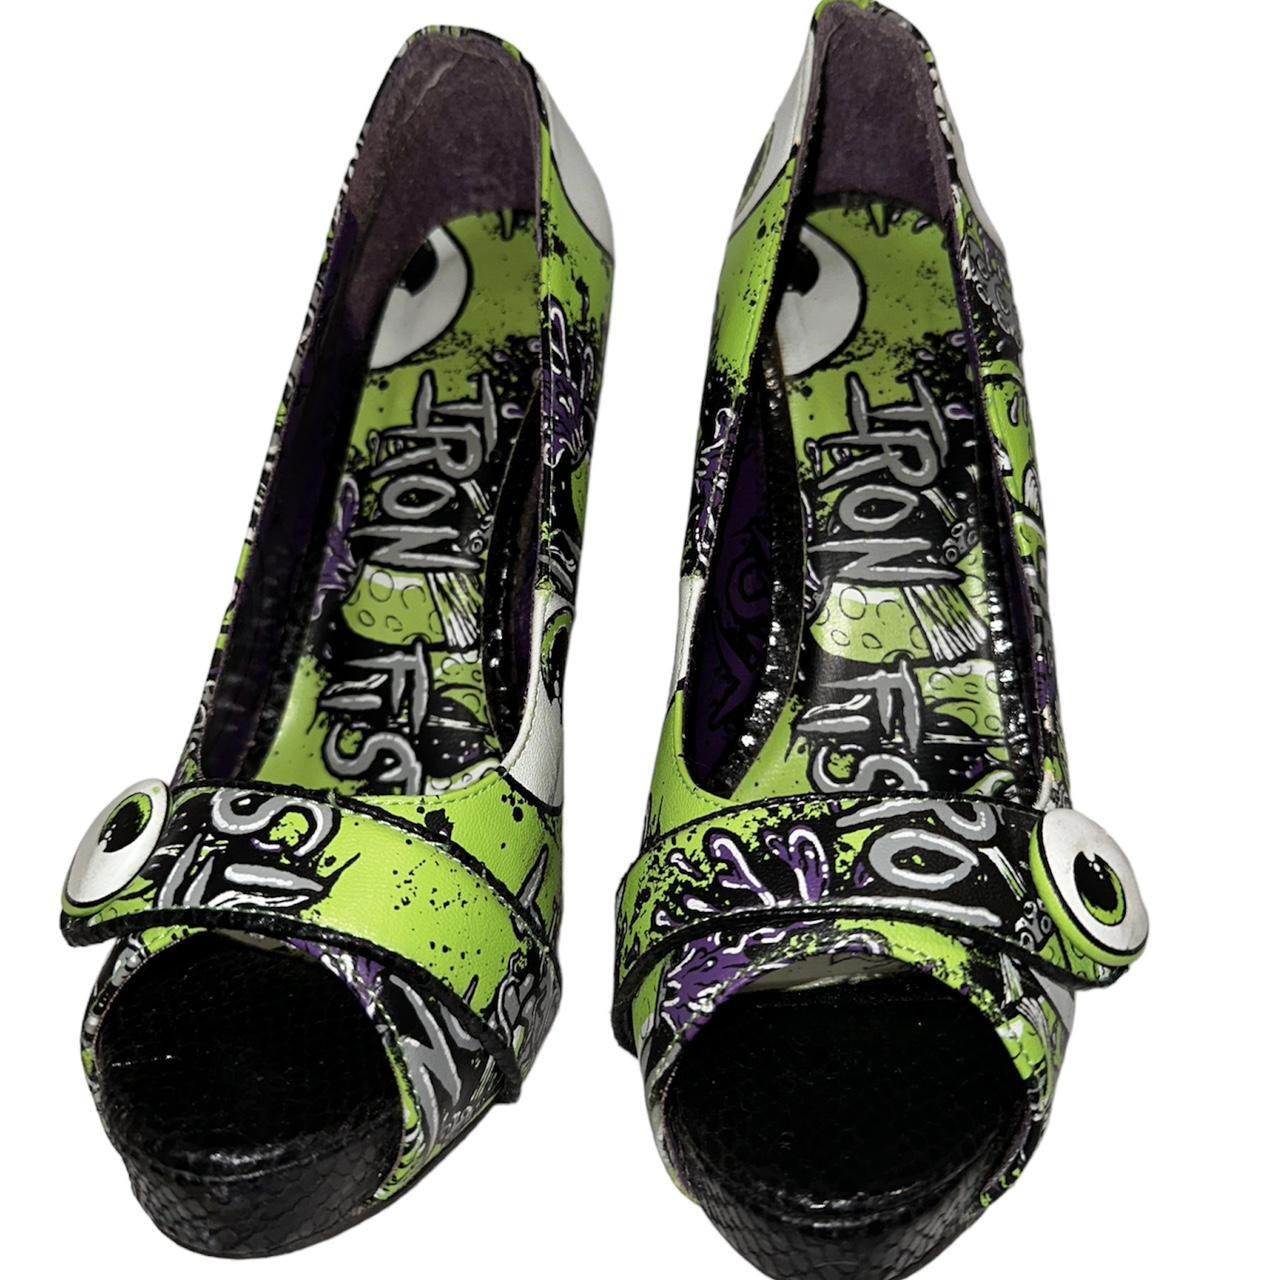 Iron Fist Women's Green and Black Footwear (2)